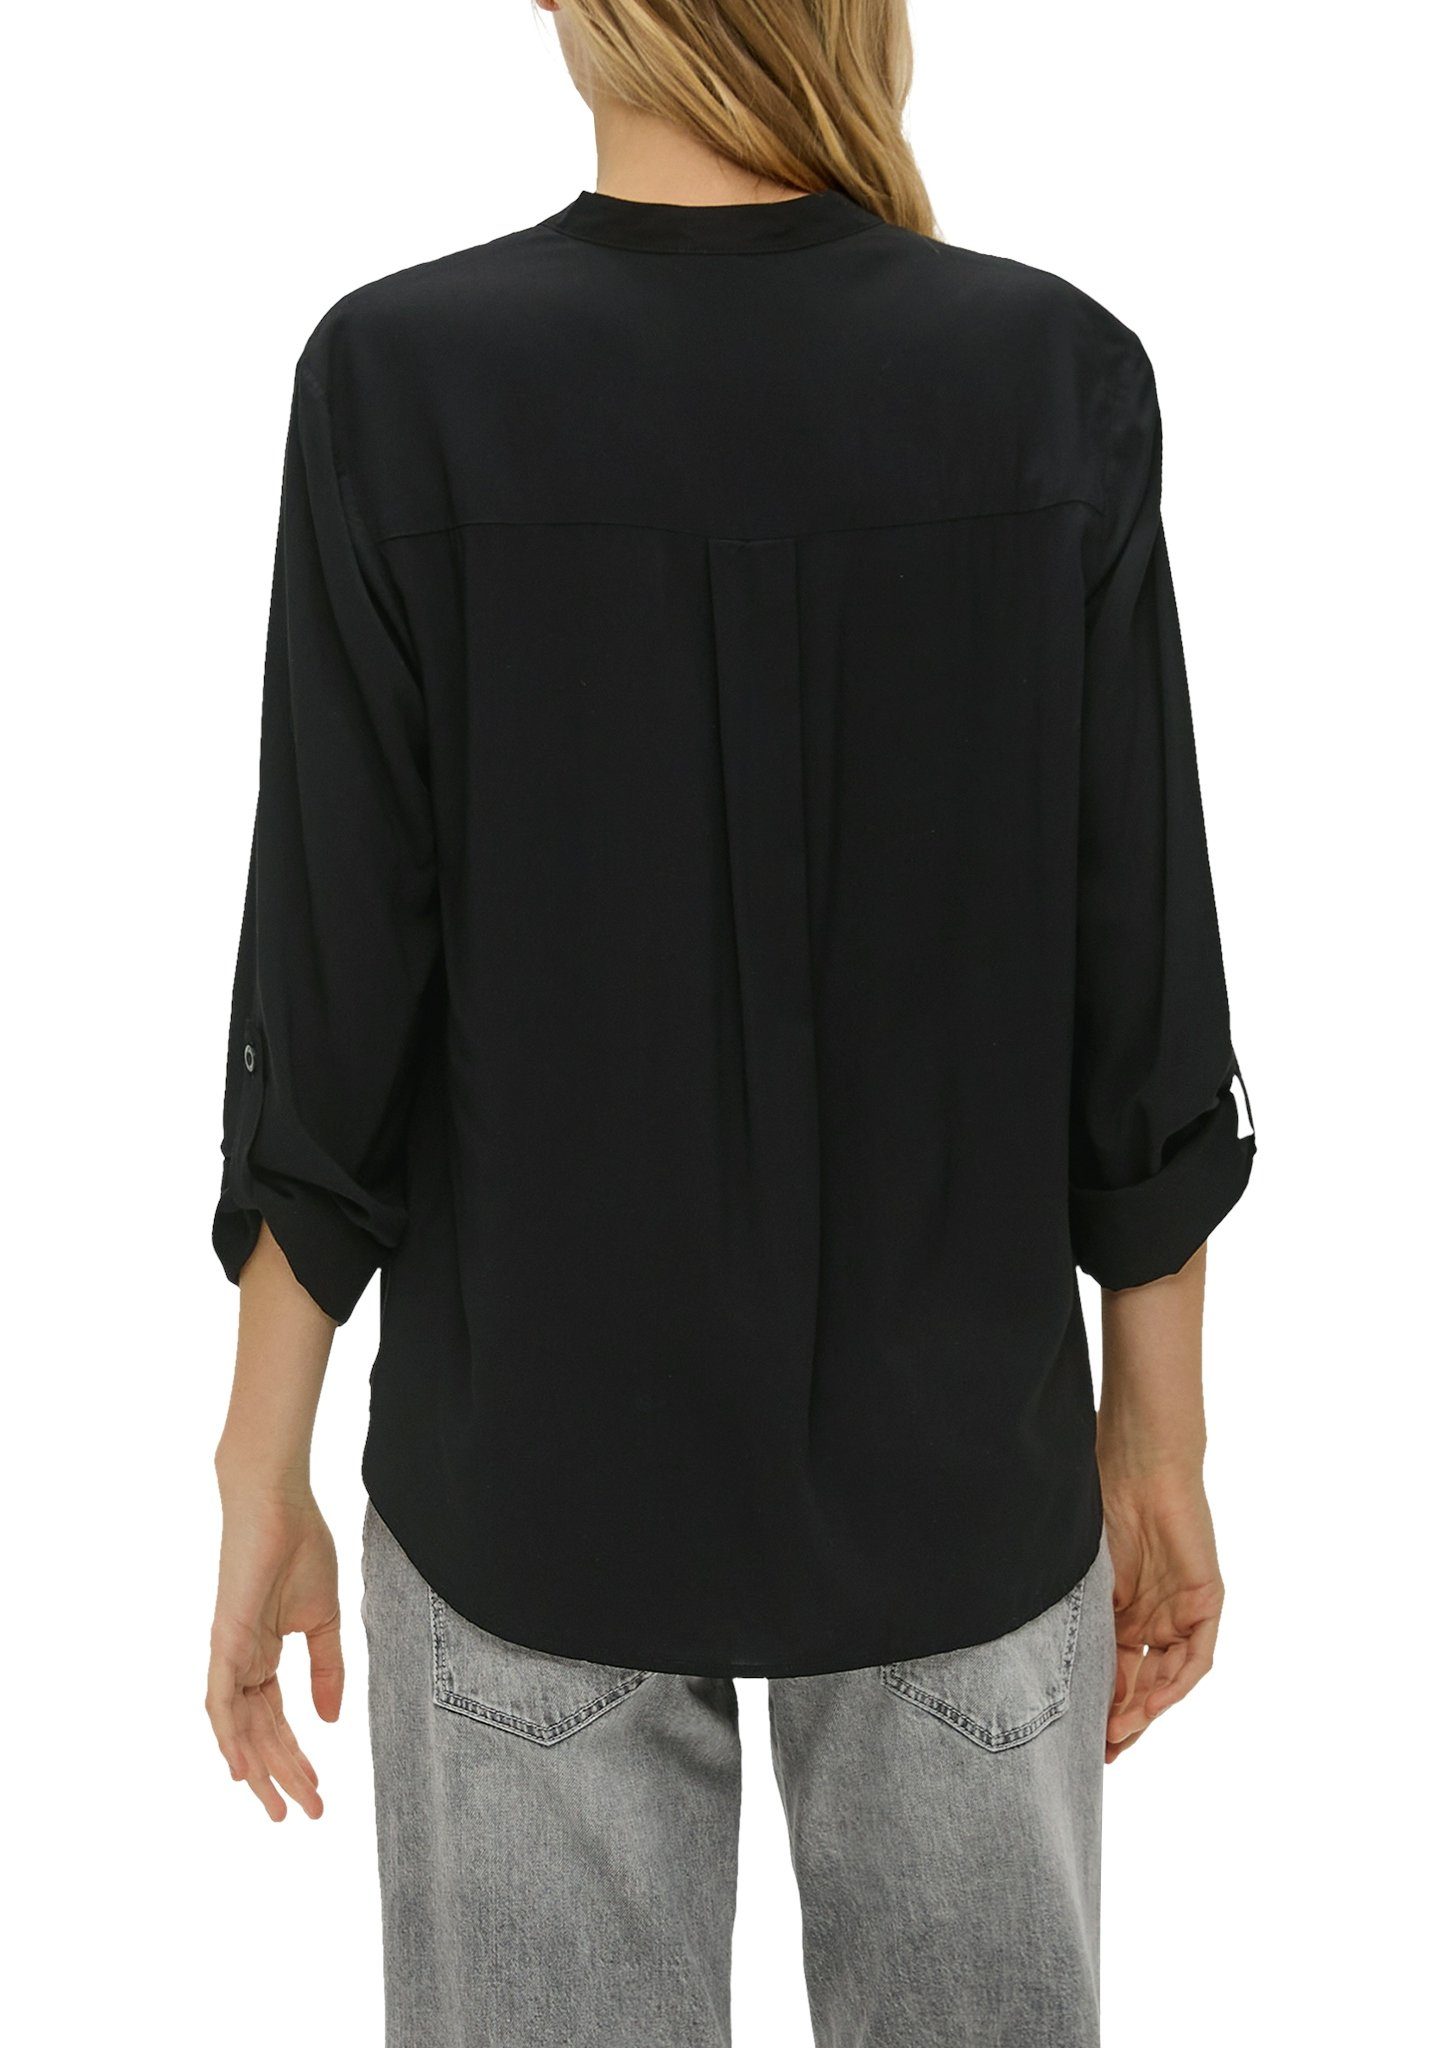 Q S designed by Lange blouse